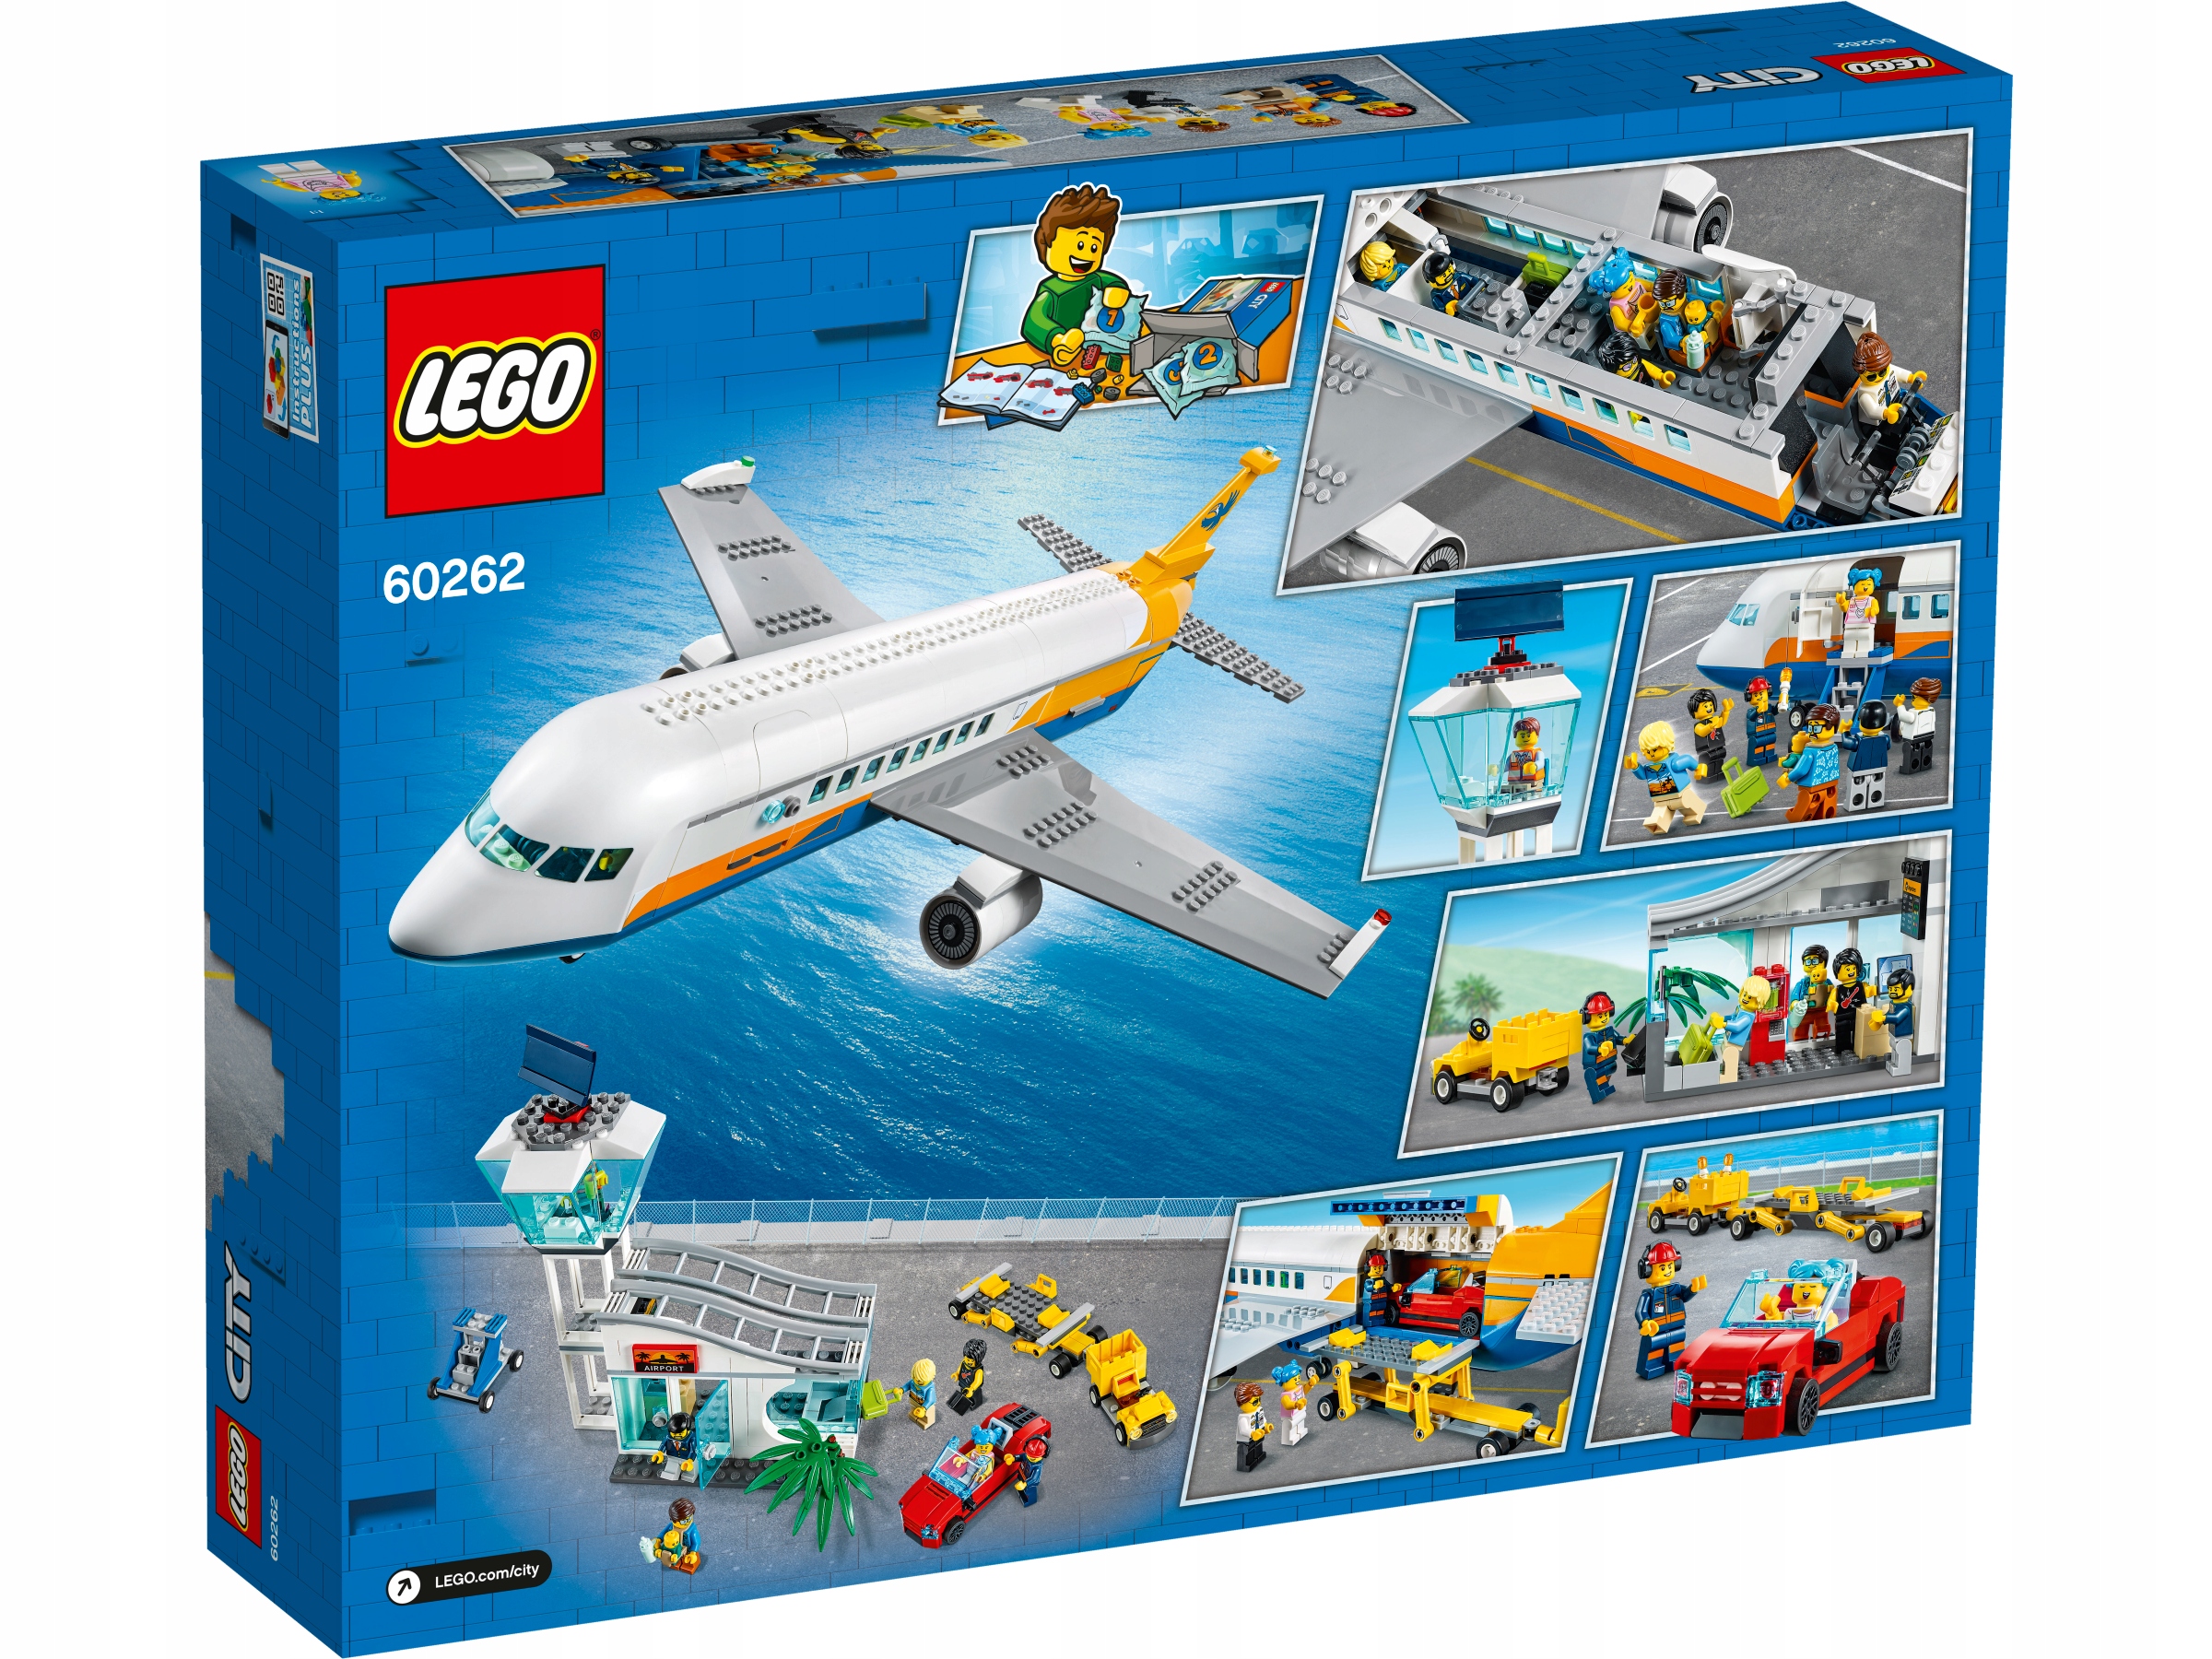 LEGO CITY pasażerski 60262 9259963173 Allegro.pl